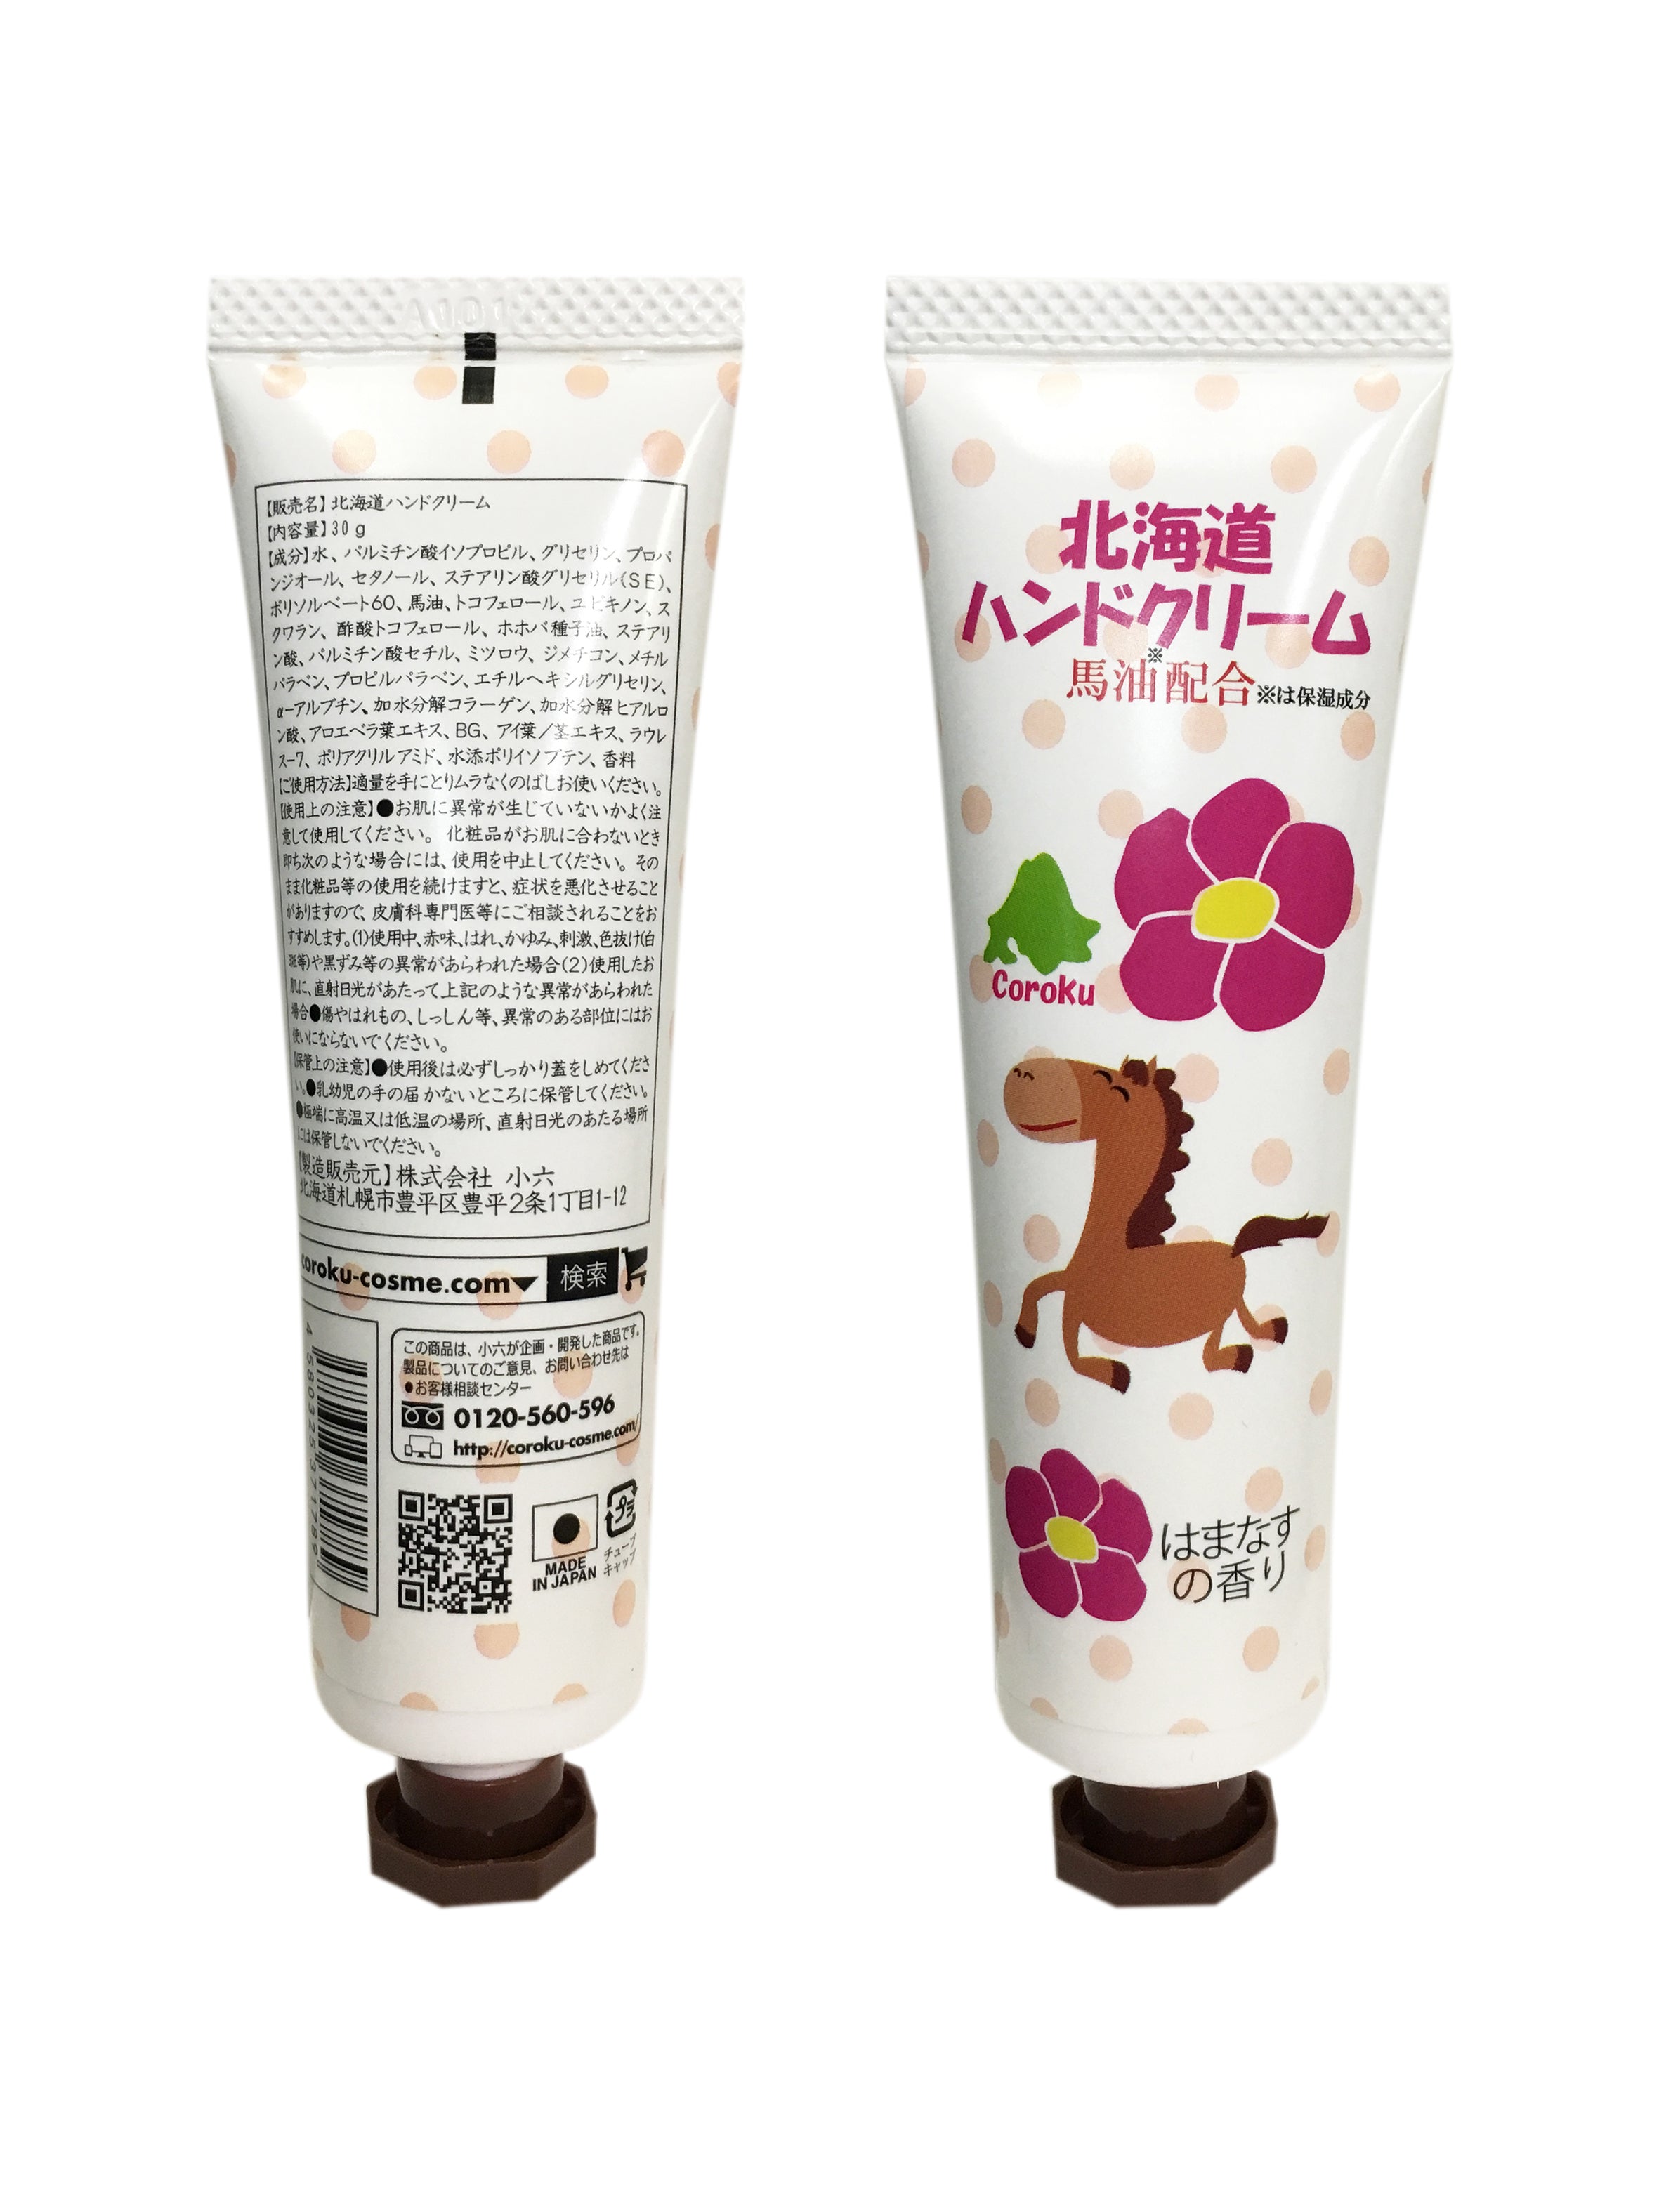 Hokkaido Horse Oil Hand Cream